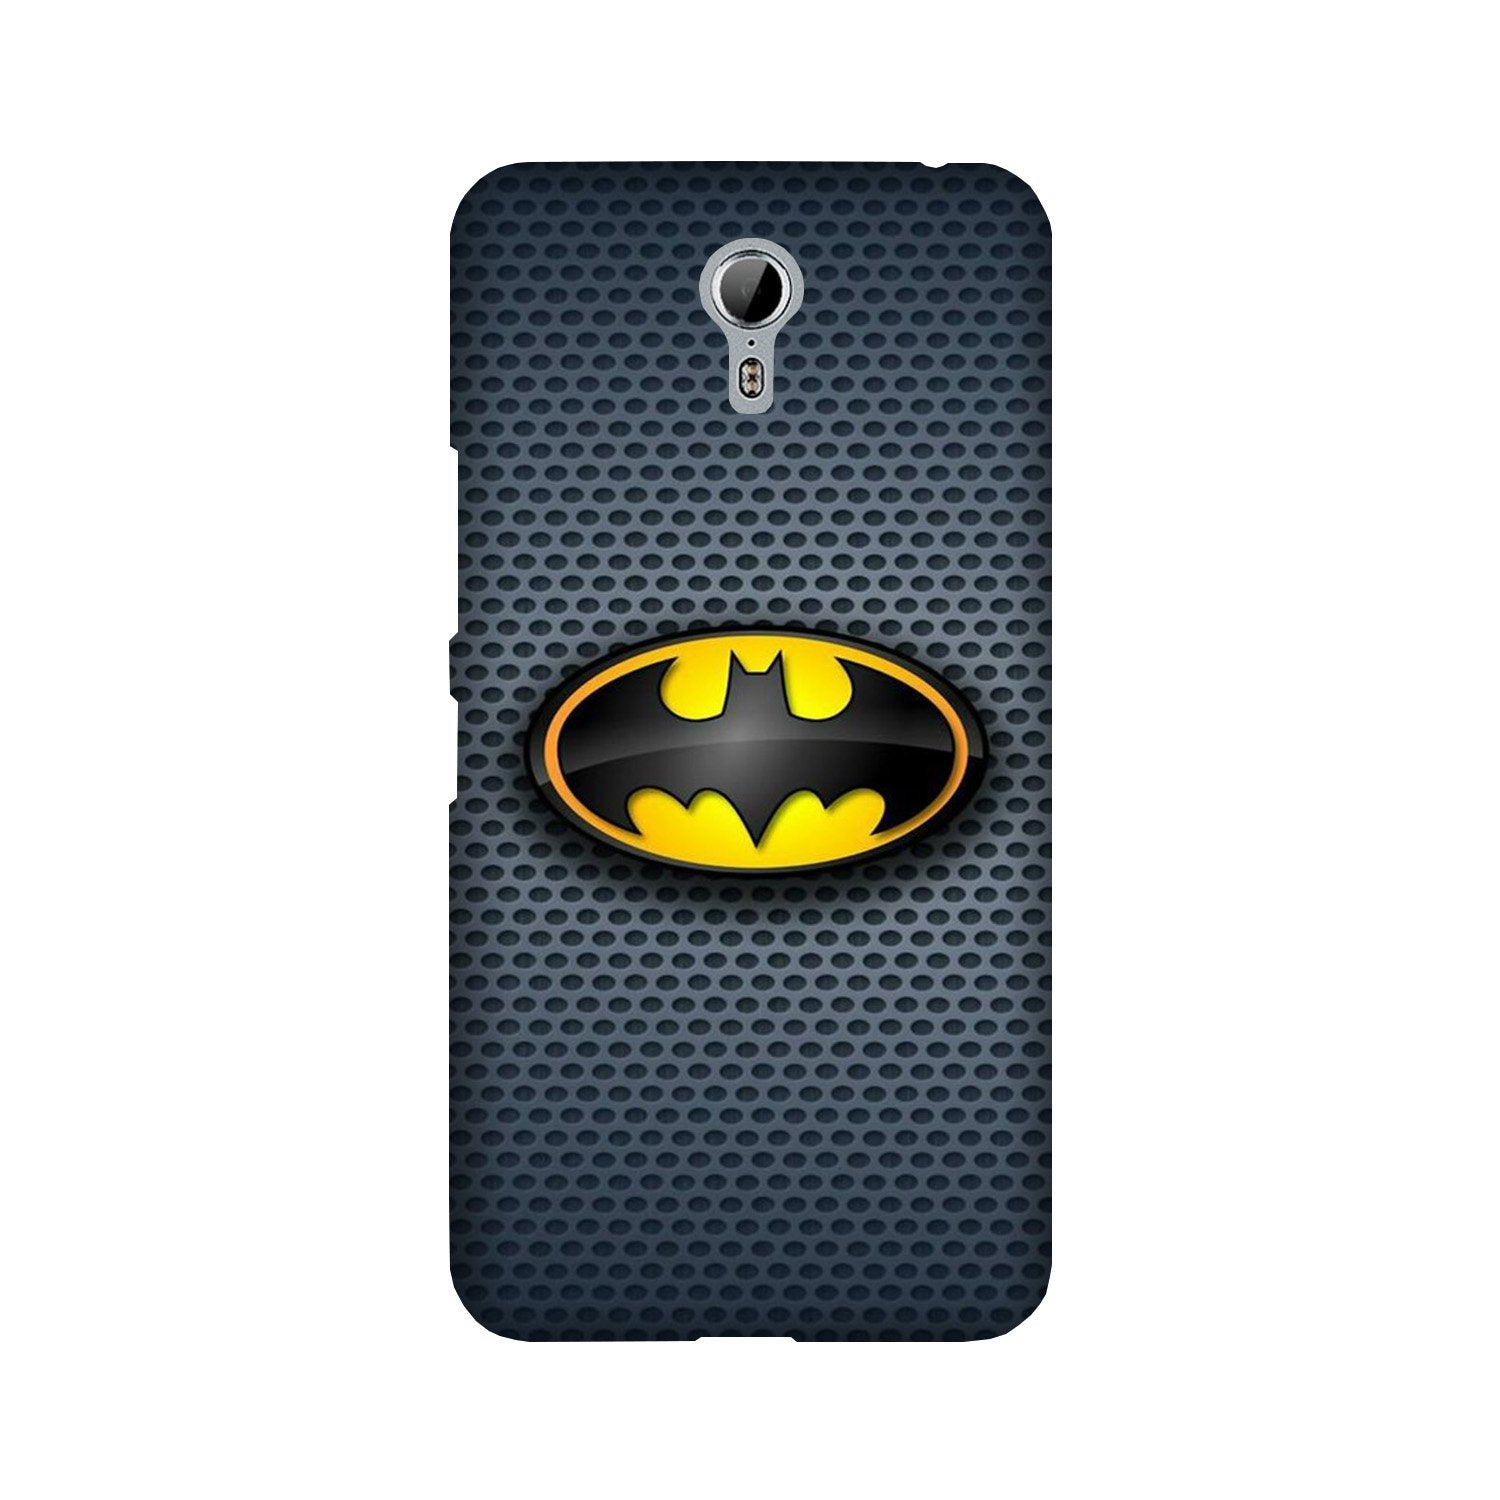 Batman Case for Lenovo Zuk Z1 (Design No. 244)